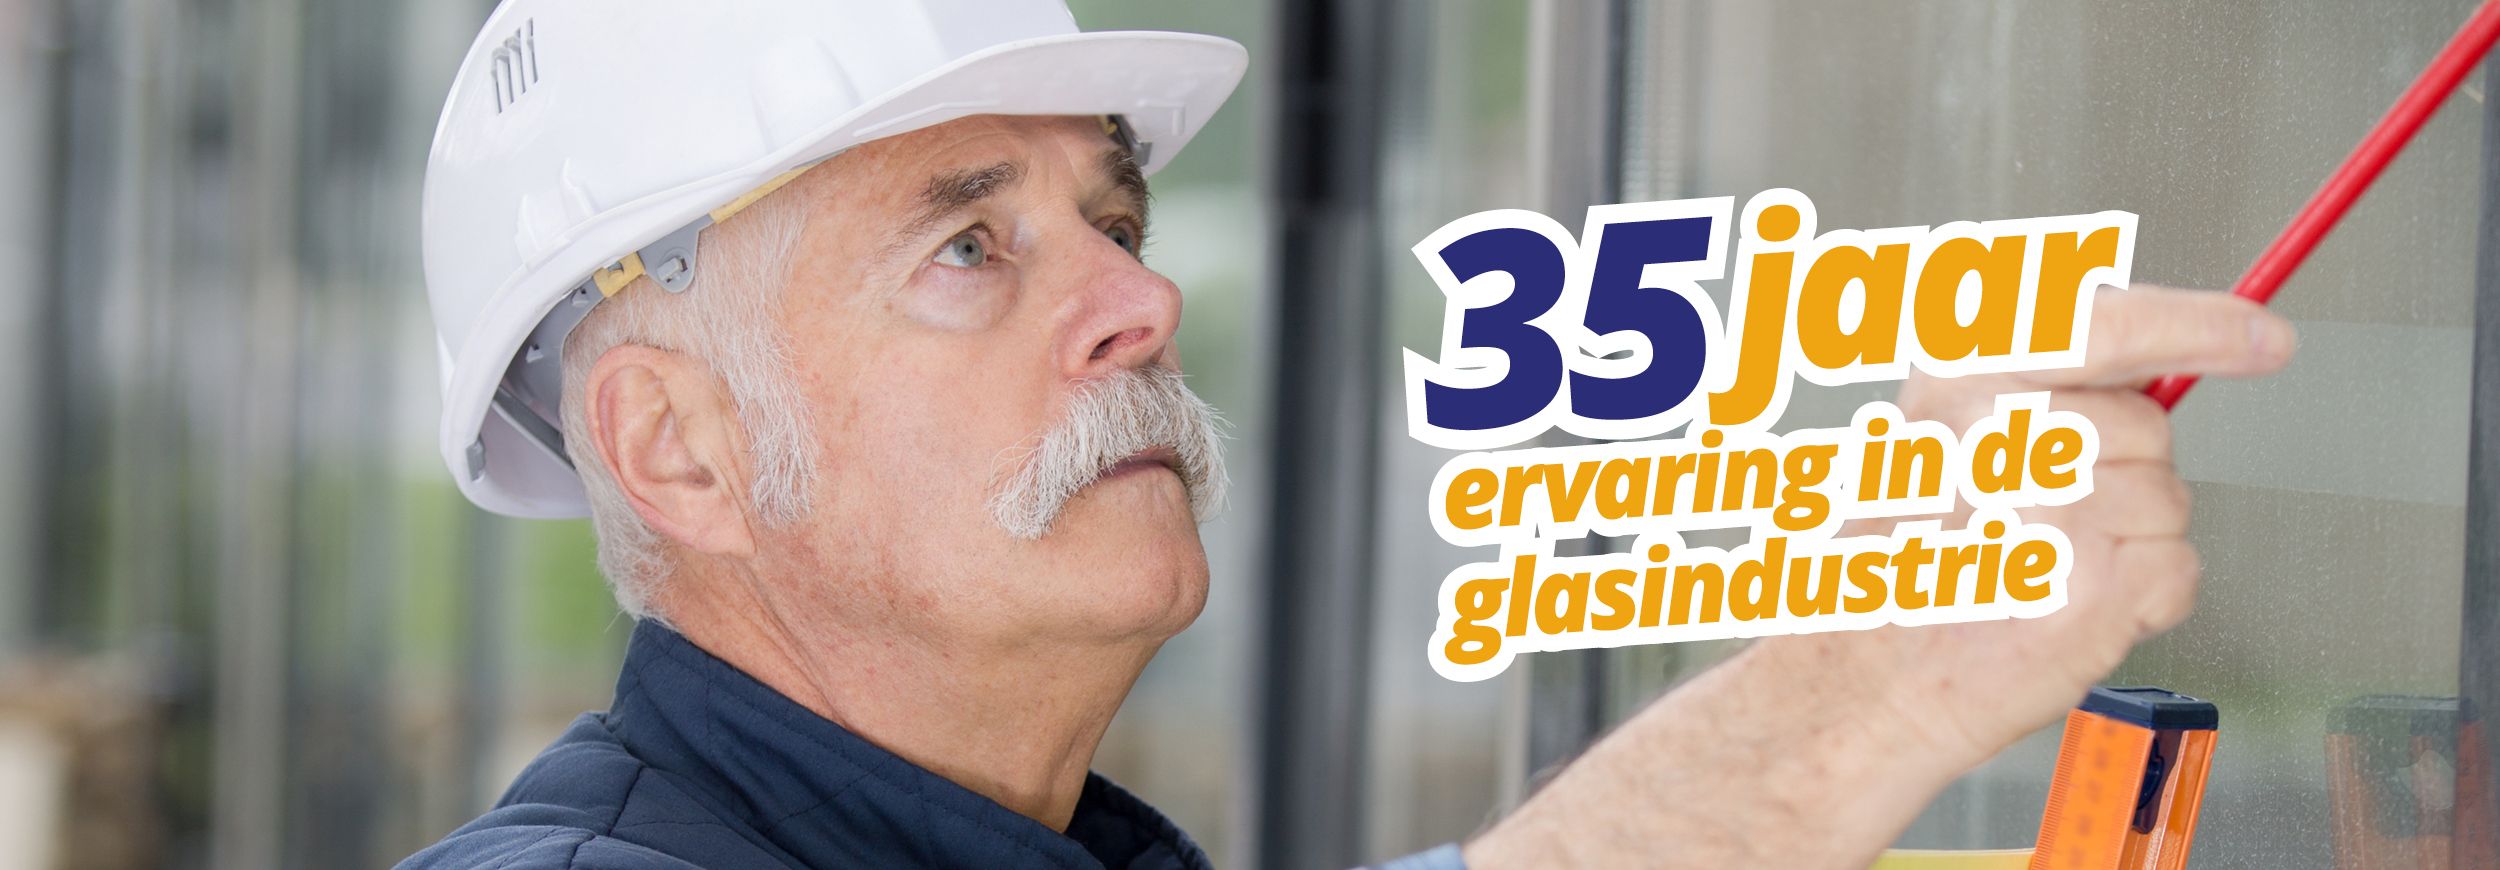 Glas opmeet app | 35 jaar ervaring in de glasindustrie